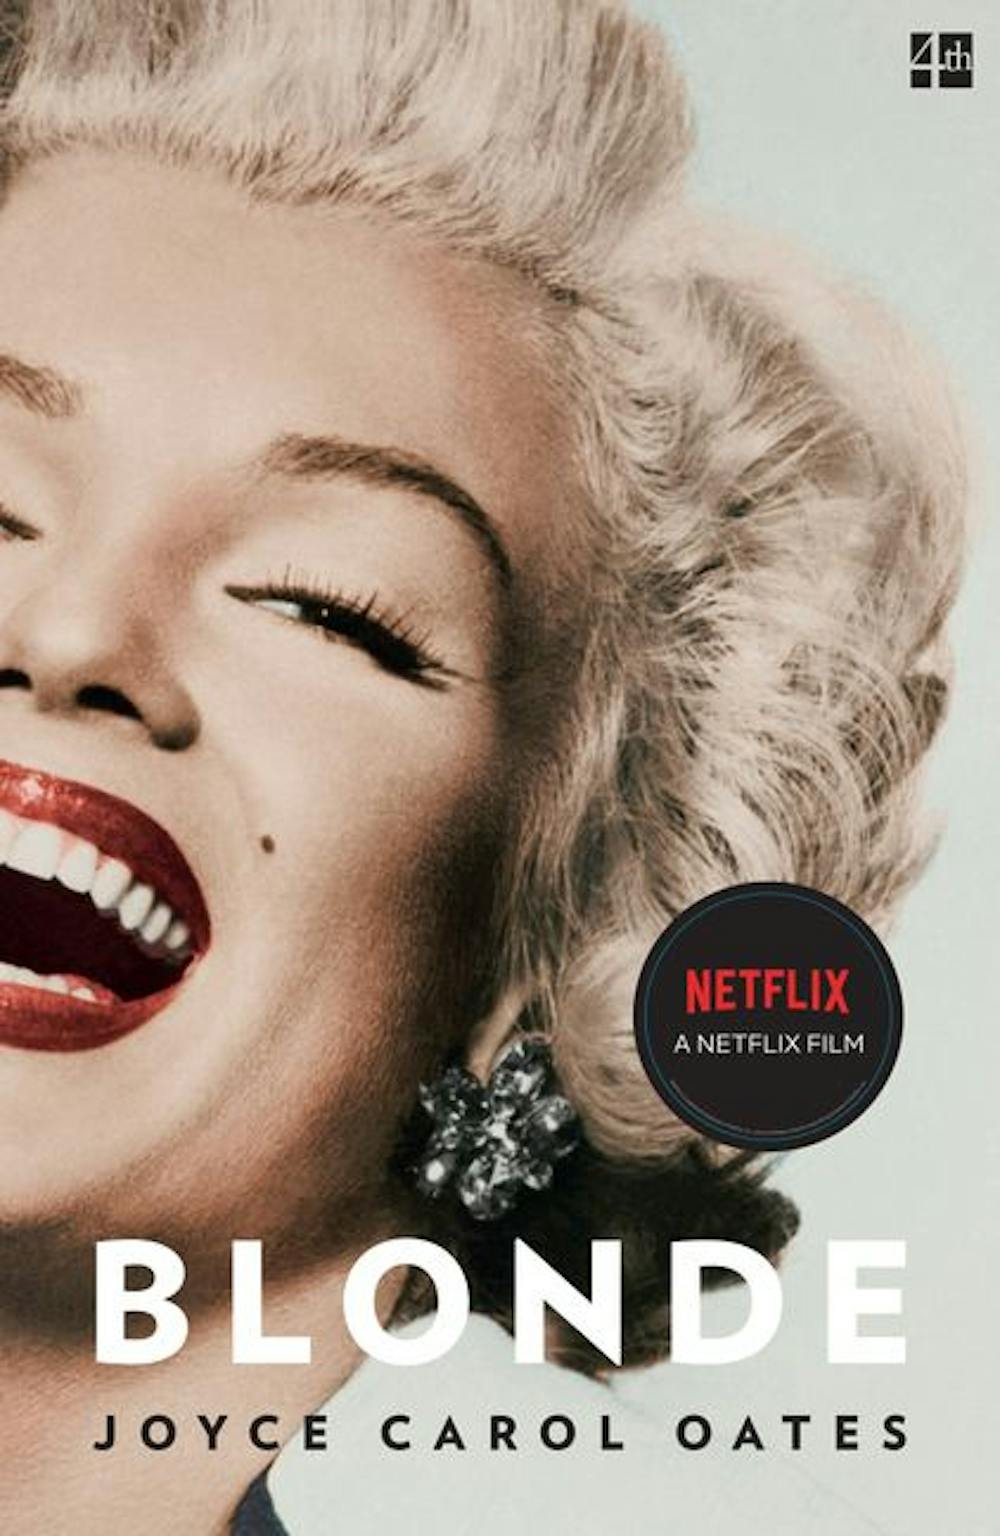 Blonde: Joyce Carol Oates' epic Marilyn Monroe novel captures the